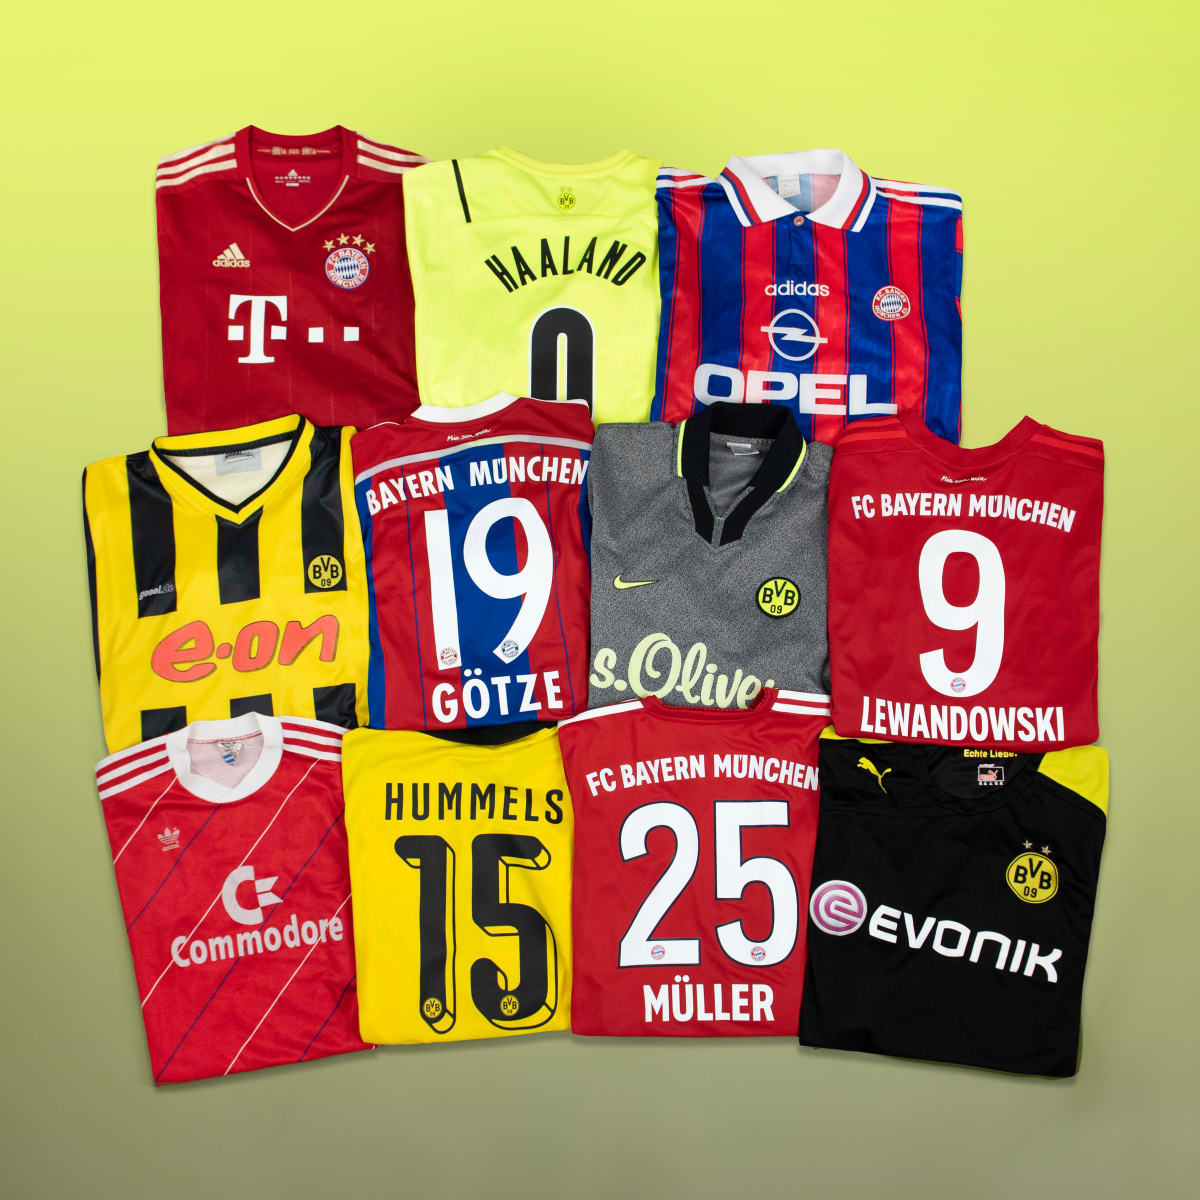 Football teams shirt and kits fan: Adidas retro font 80's-90's German  Style